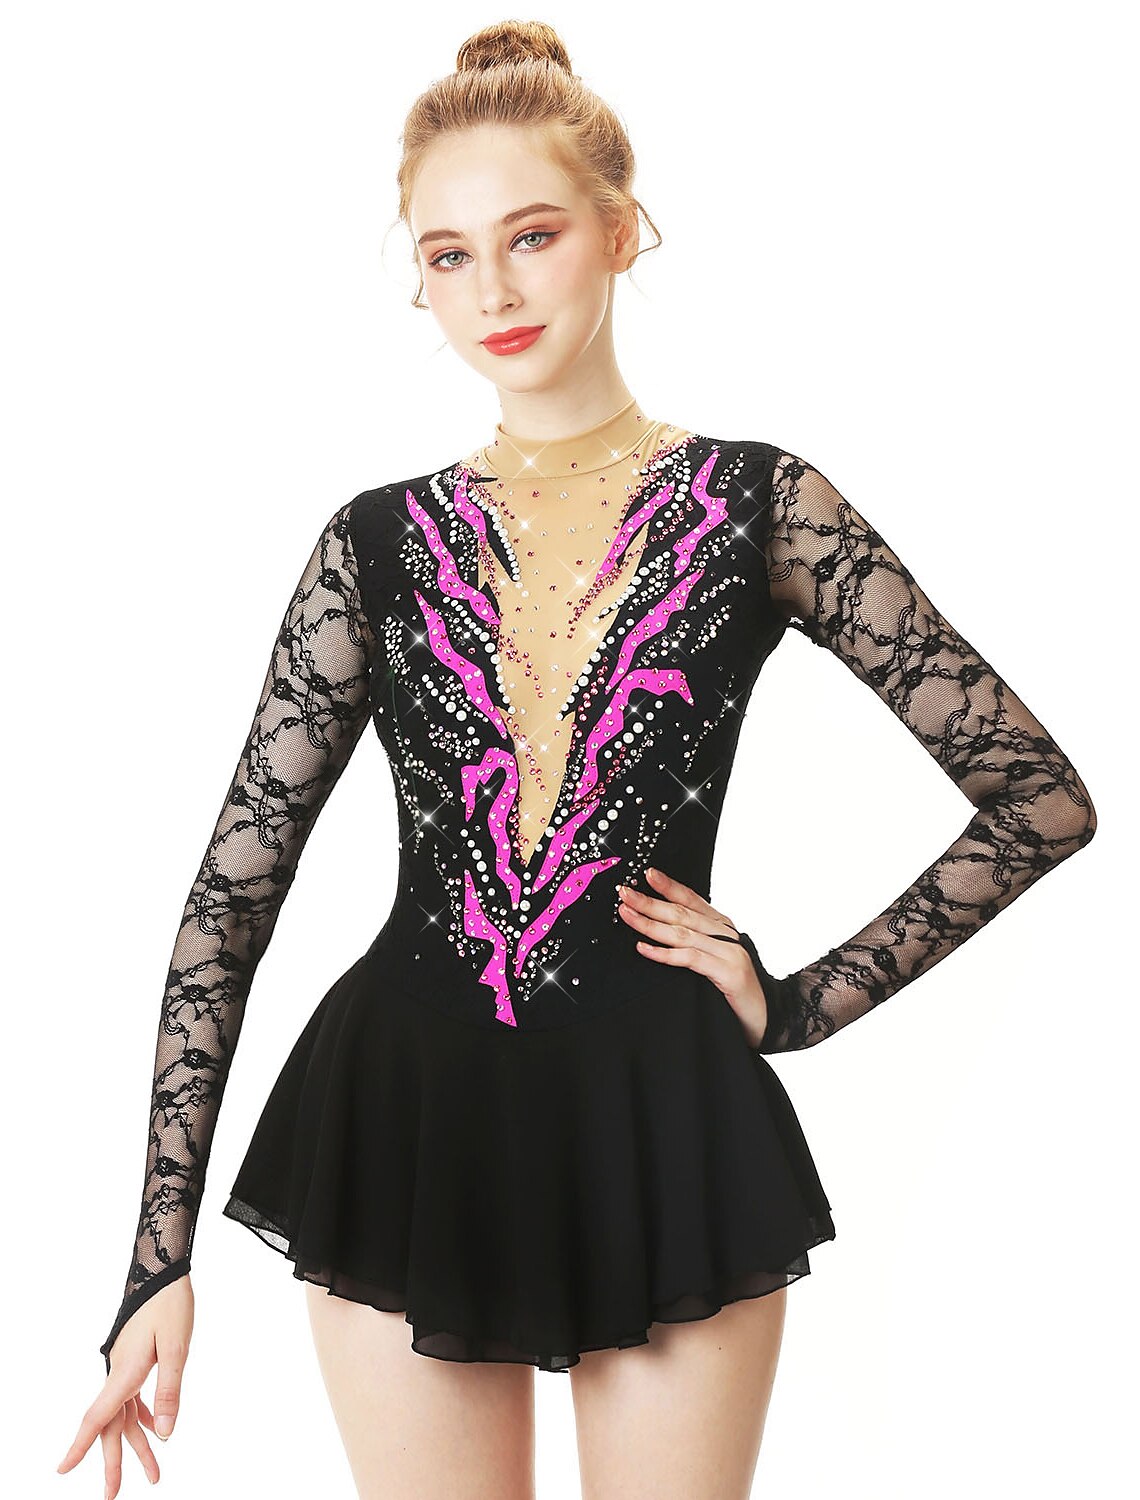 Girl custom ice skating dress spandex pink figure dresses competition black 